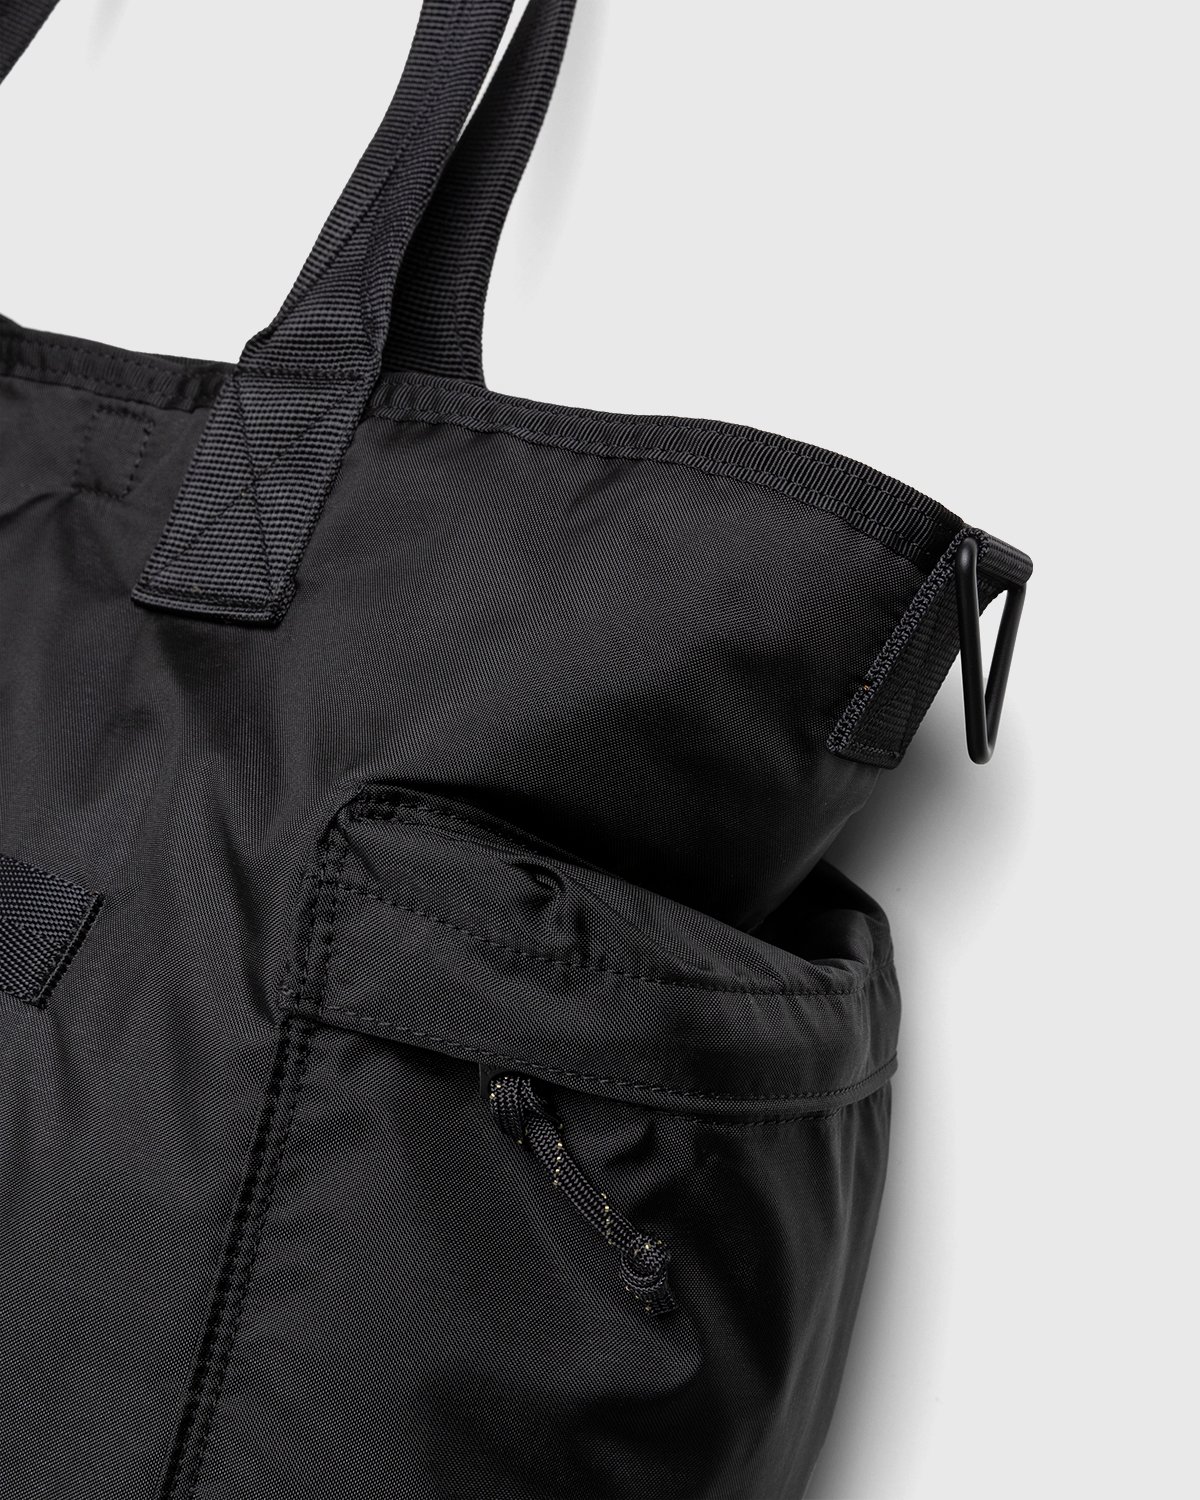 Porter-Yoshida & Co. - 2-Way Tote Bag Black - Accessories - Black - Image 4